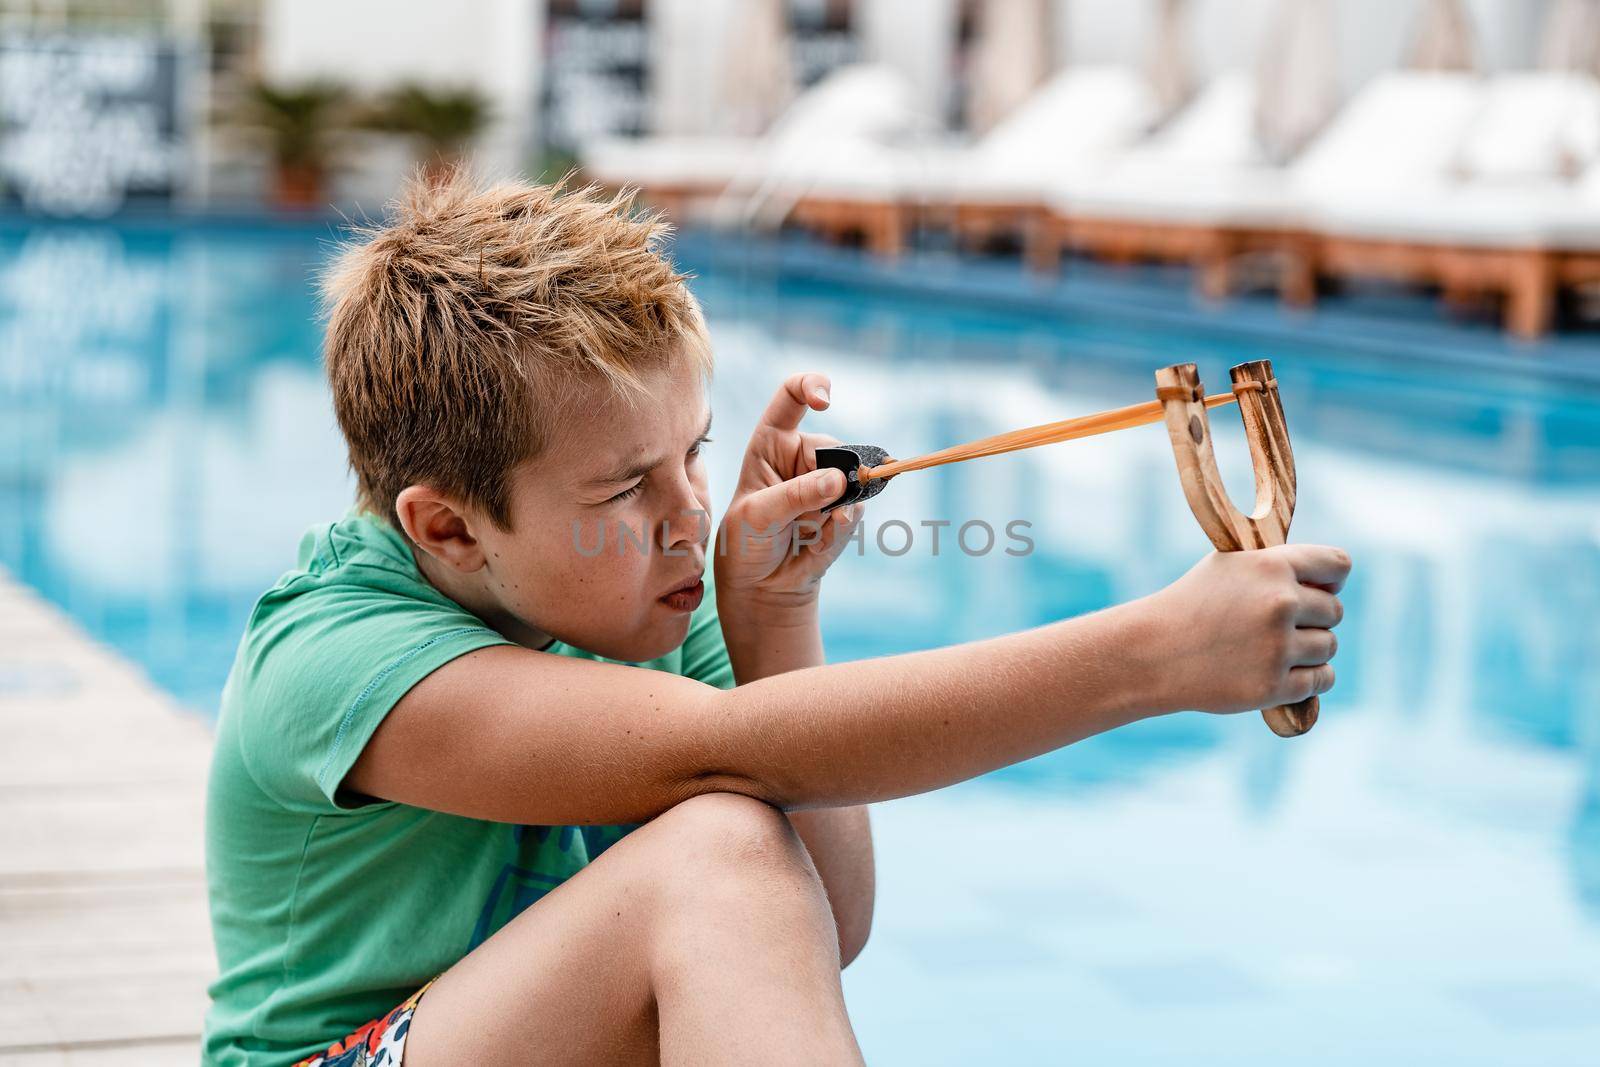 A boy shoots a slingshot near the pool by Praximon